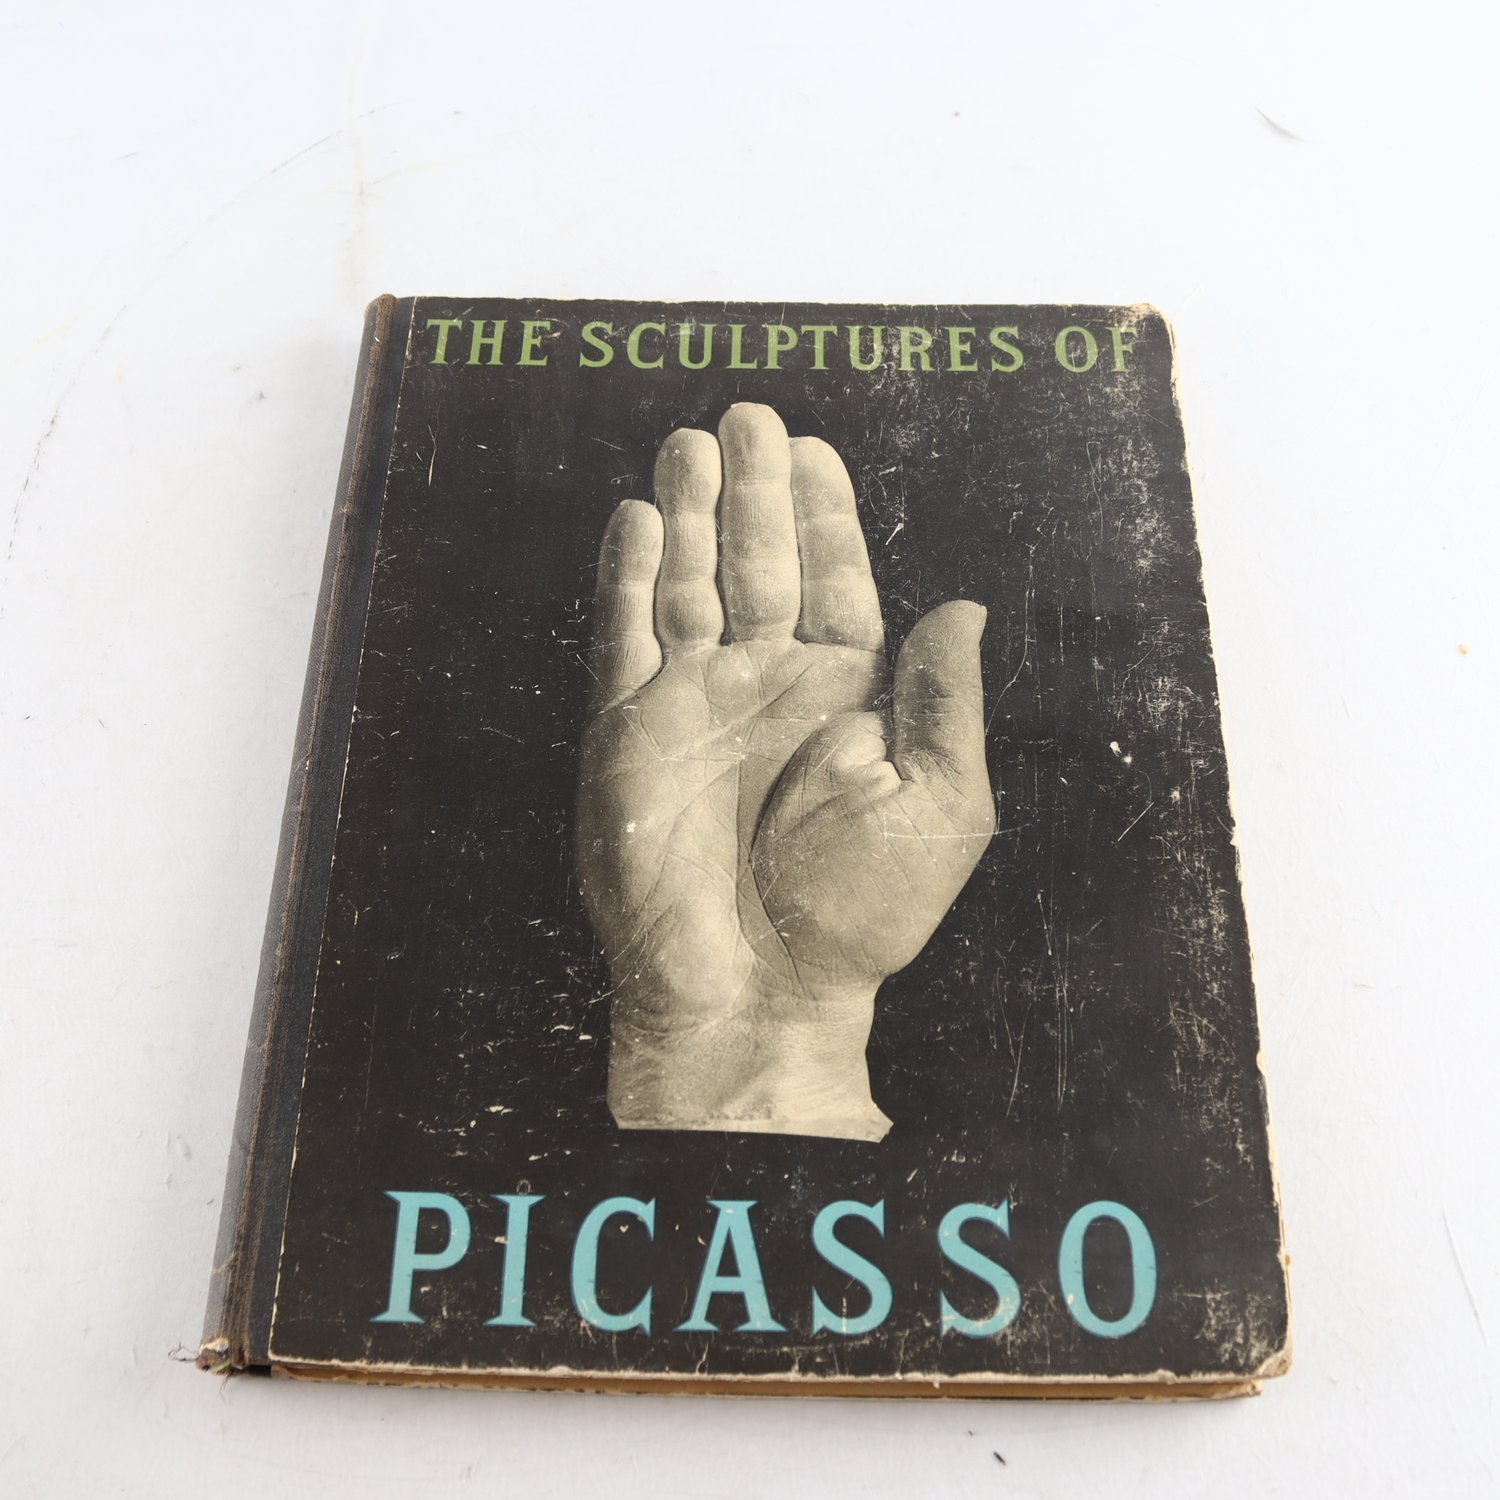 The Sculptures of Picasso, Daniel Henry Kahnweiler, Photos Brassai